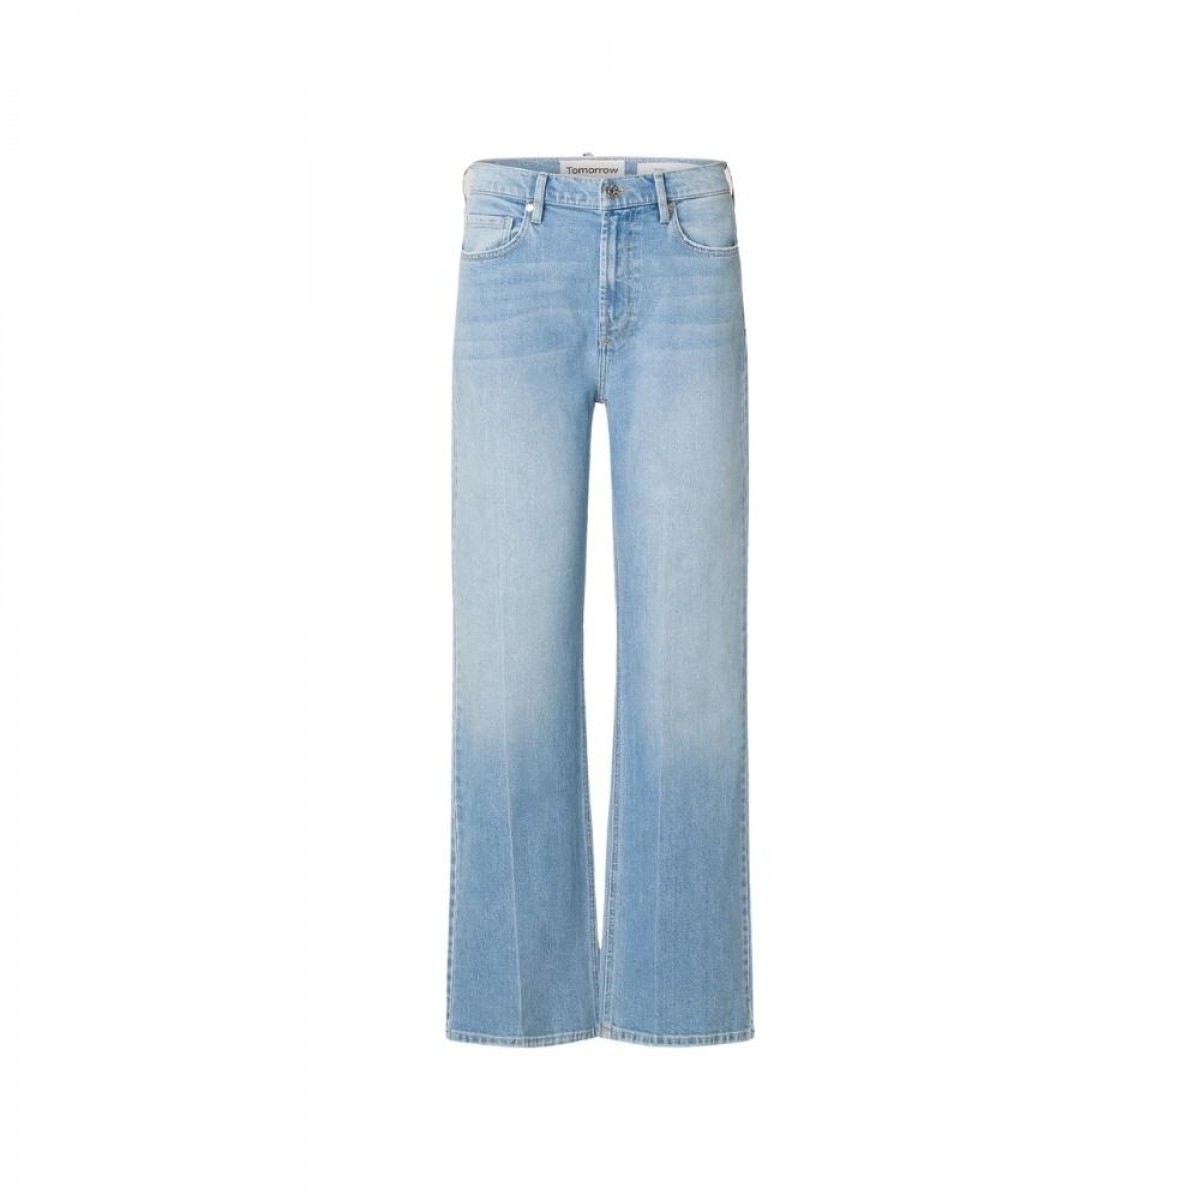 brown straight jeans - denim blue - front